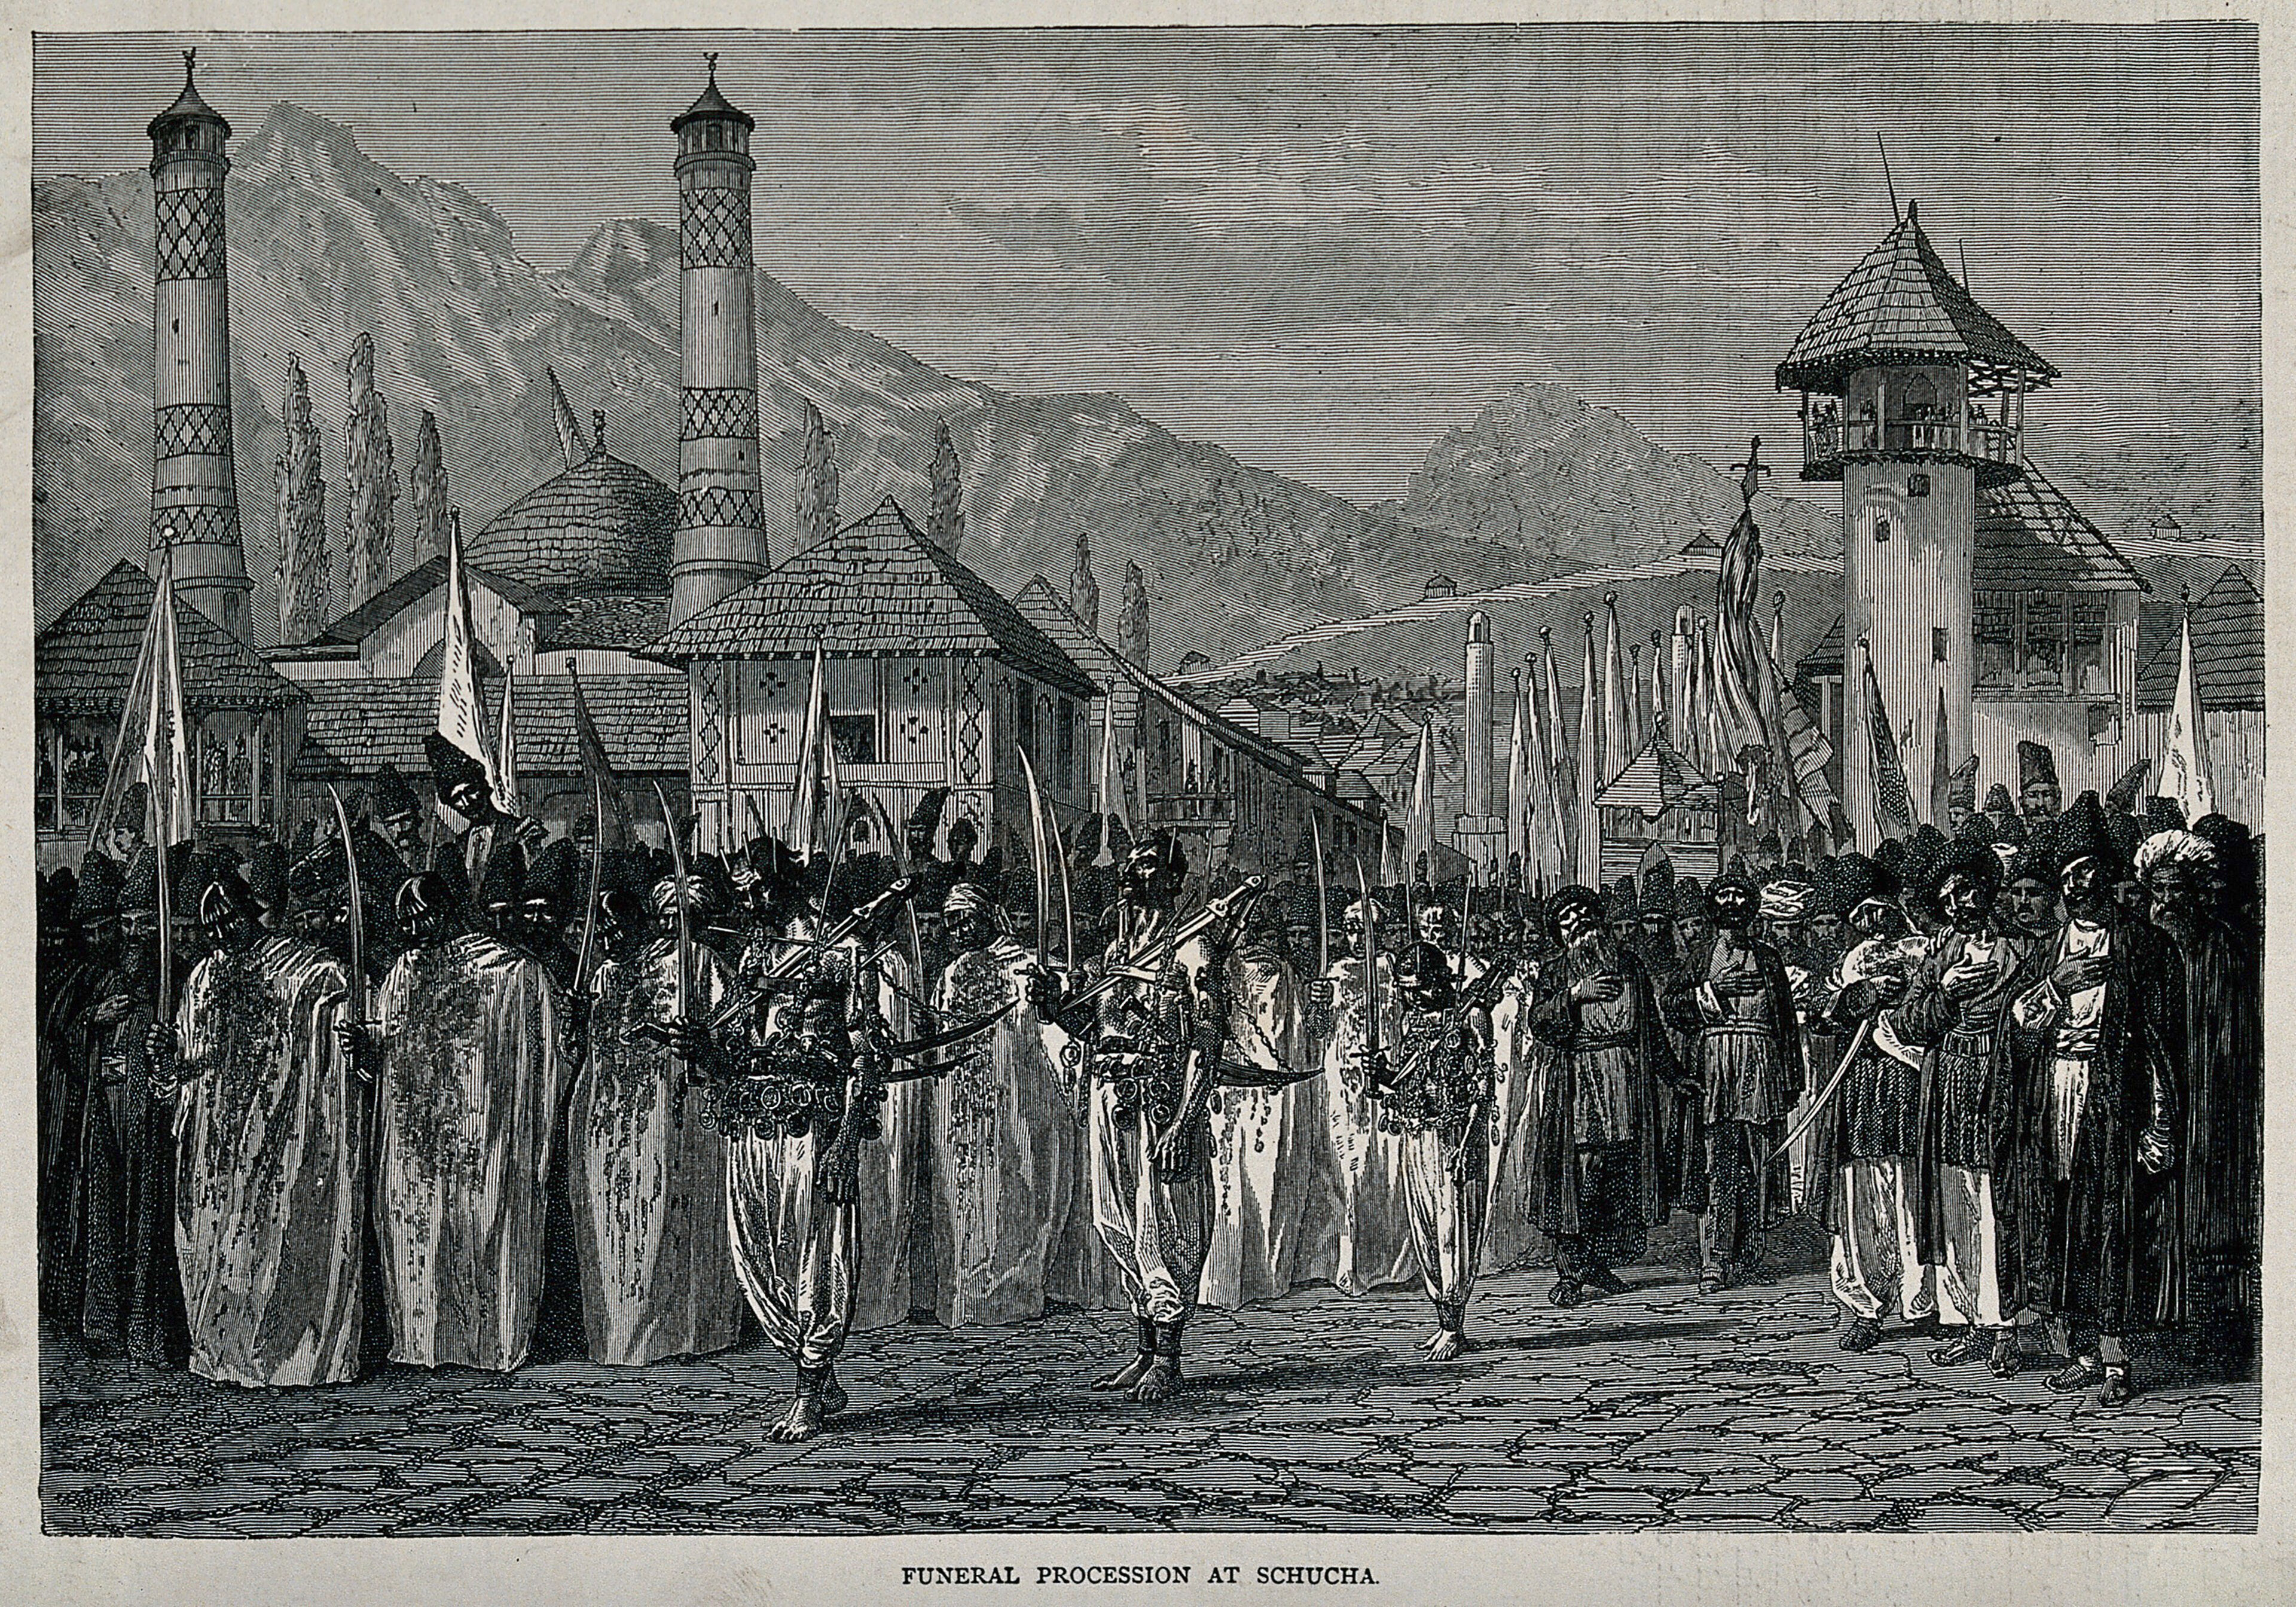 Schucha, Caucasus: a funeral procession of men holding swords. Wood engraving, ca. 1870.